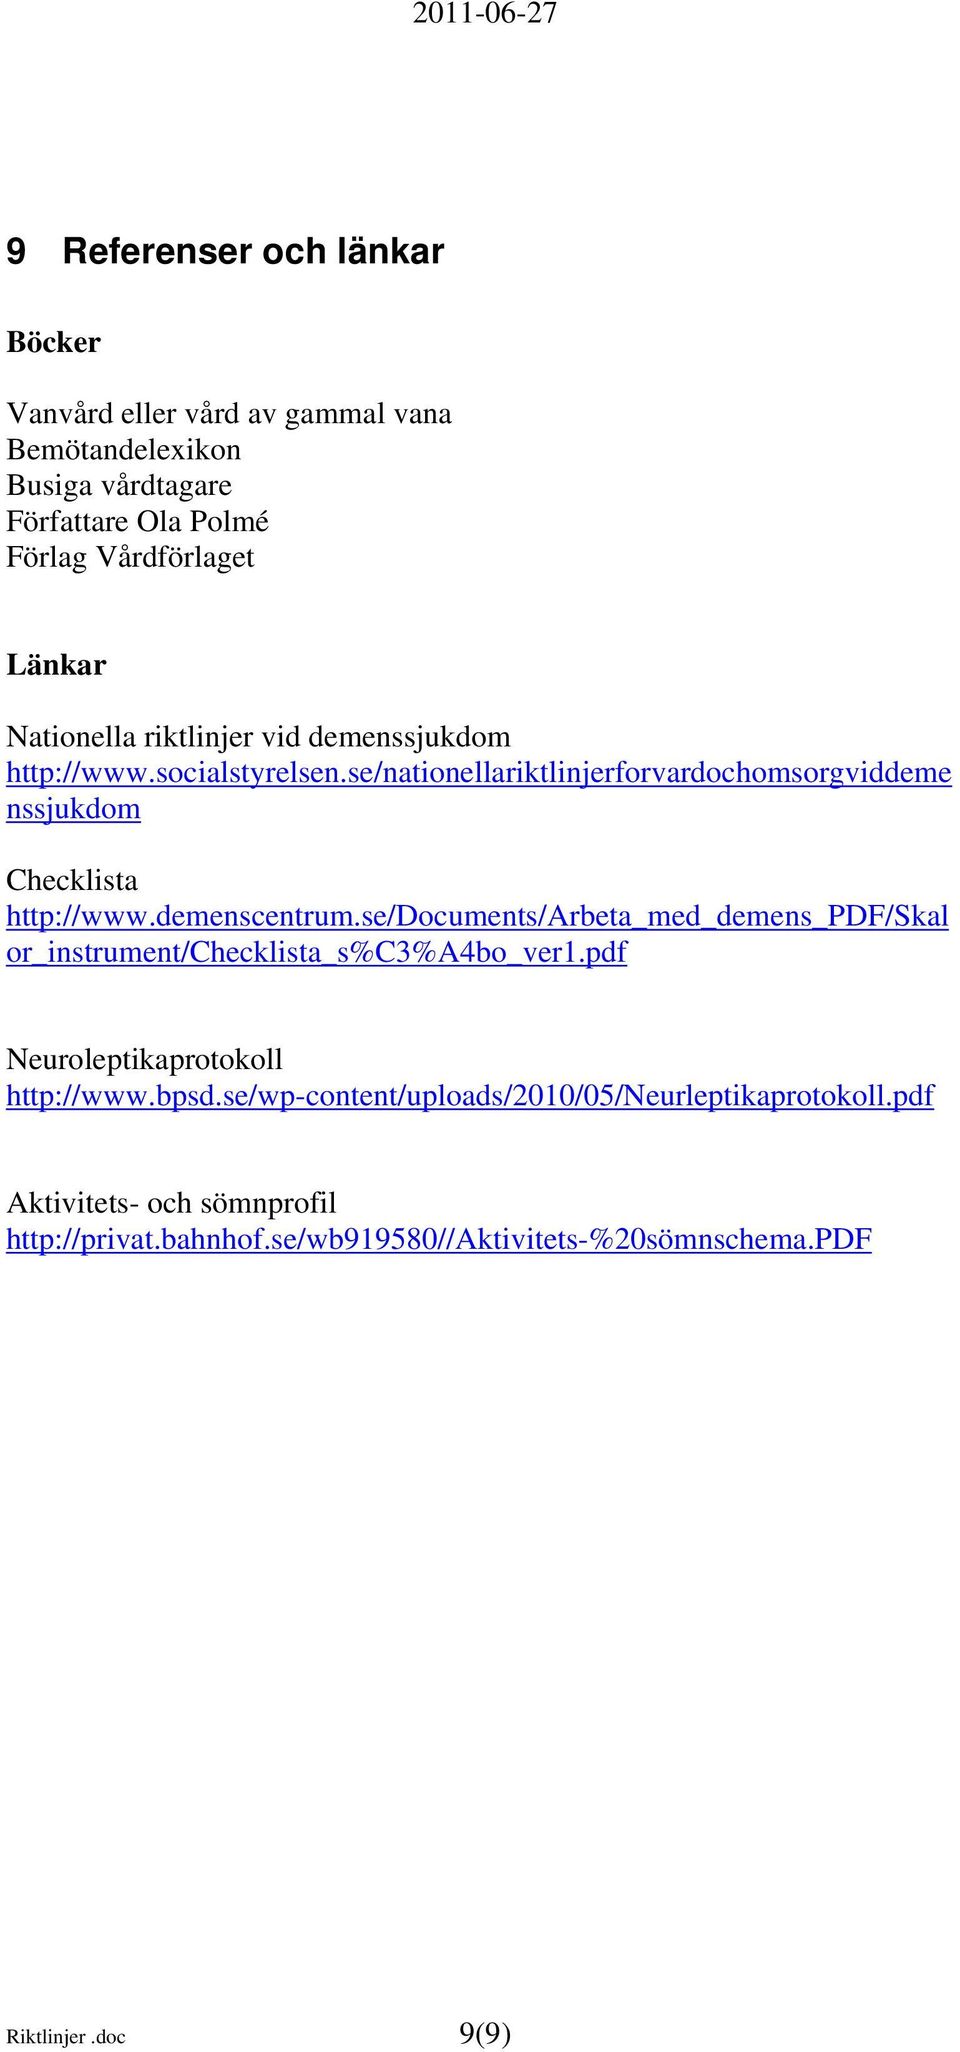 demenscentrum.se/documents/arbeta_med_demens_pdf/skal or_instrument/checklista_s%c3%a4bo_ver1.pdf Neuroleptikaprotokoll http://www.bpsd.